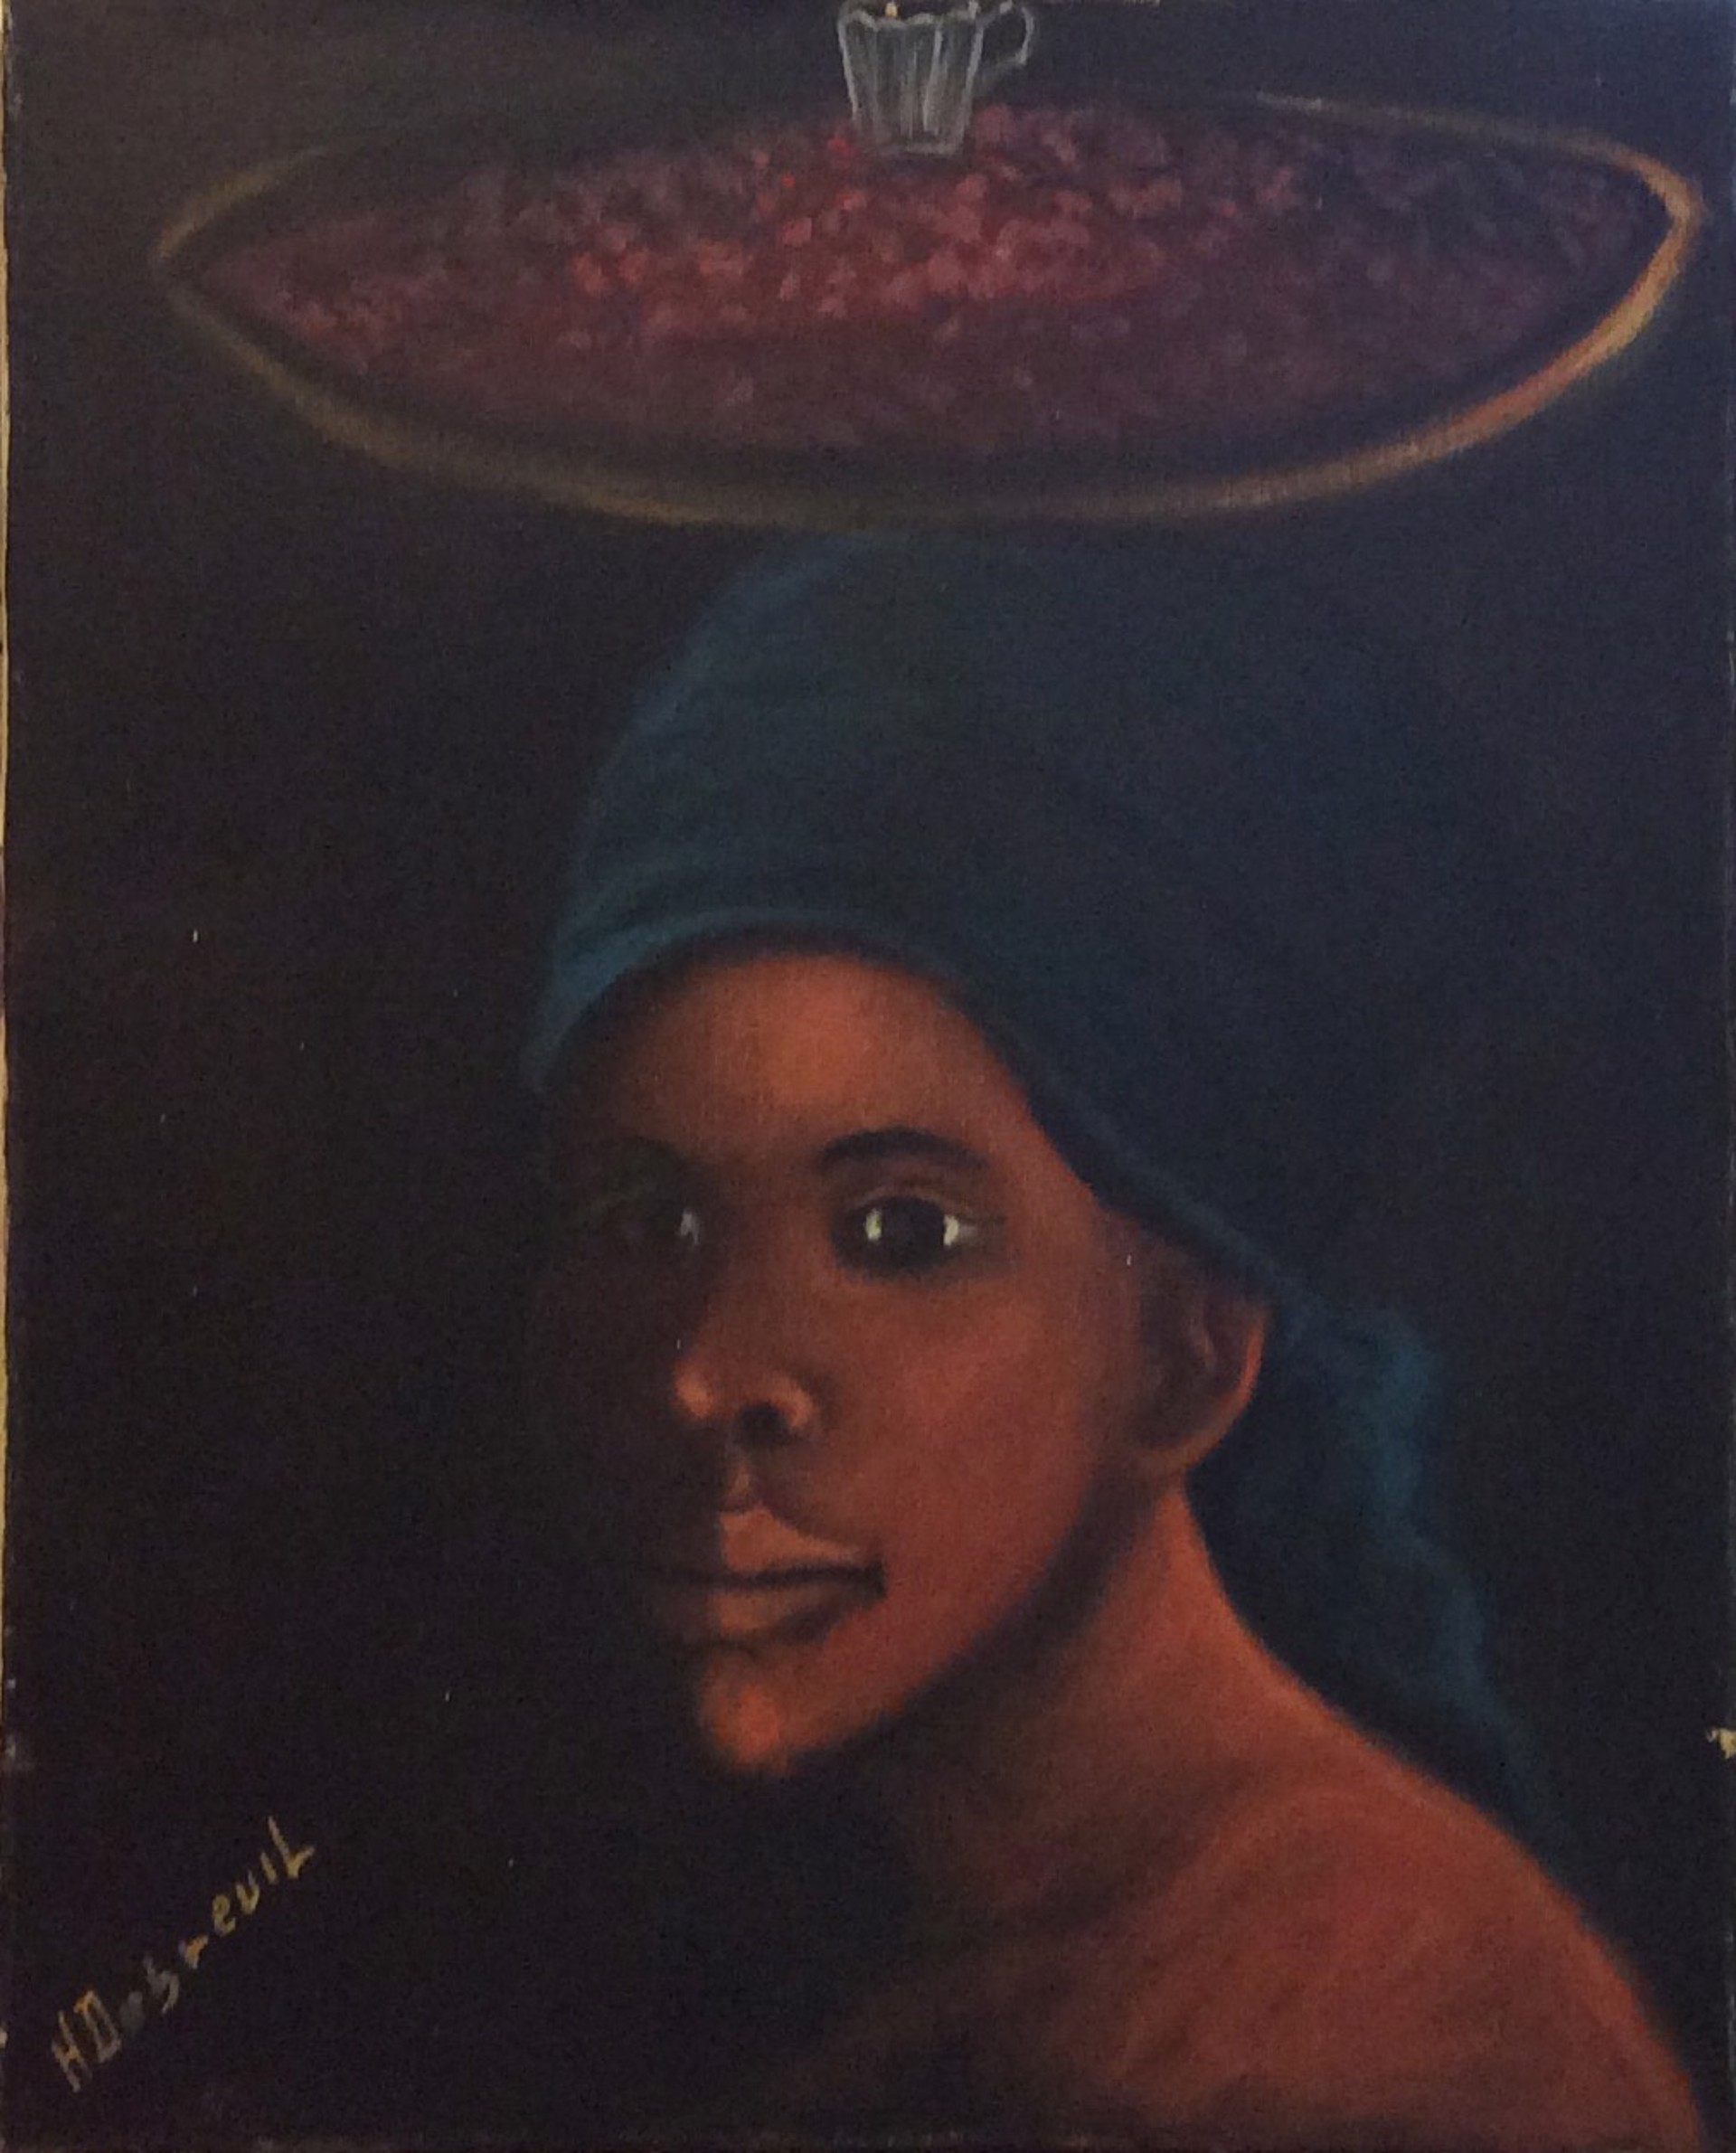 Pistachios Seller #31-1-93MFN by Henry Dubreuil (Haitian, 1949-1994)